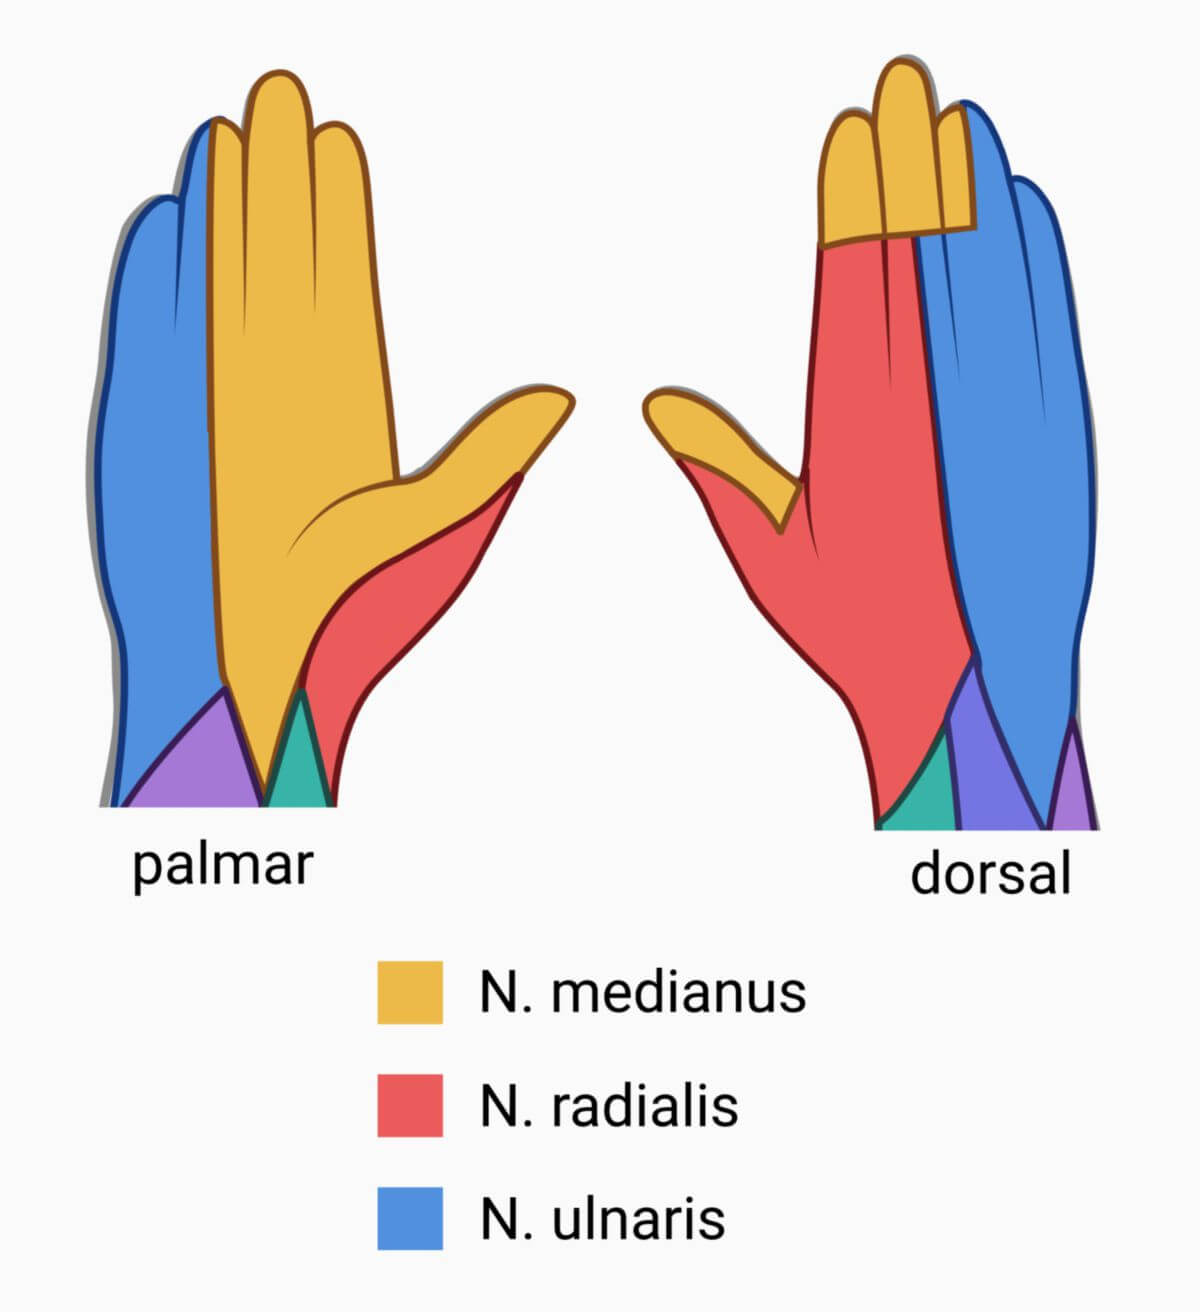 Innervationsmuster der Hand